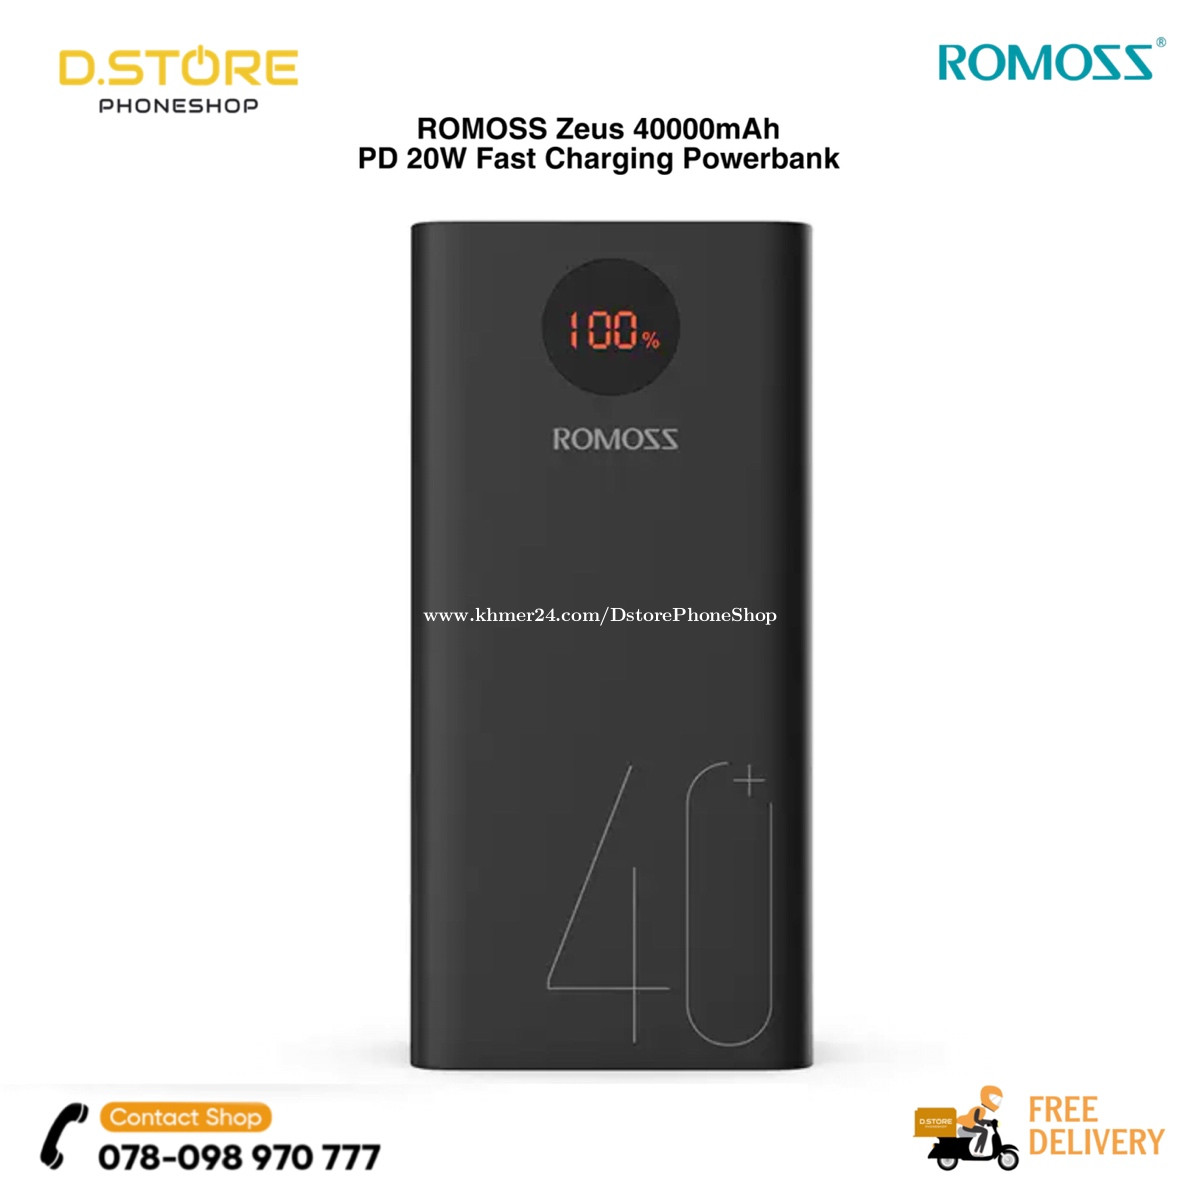 ROMOSS Zeus - 40000mAh PD 20W Fast Charging Powerbank price $39.00